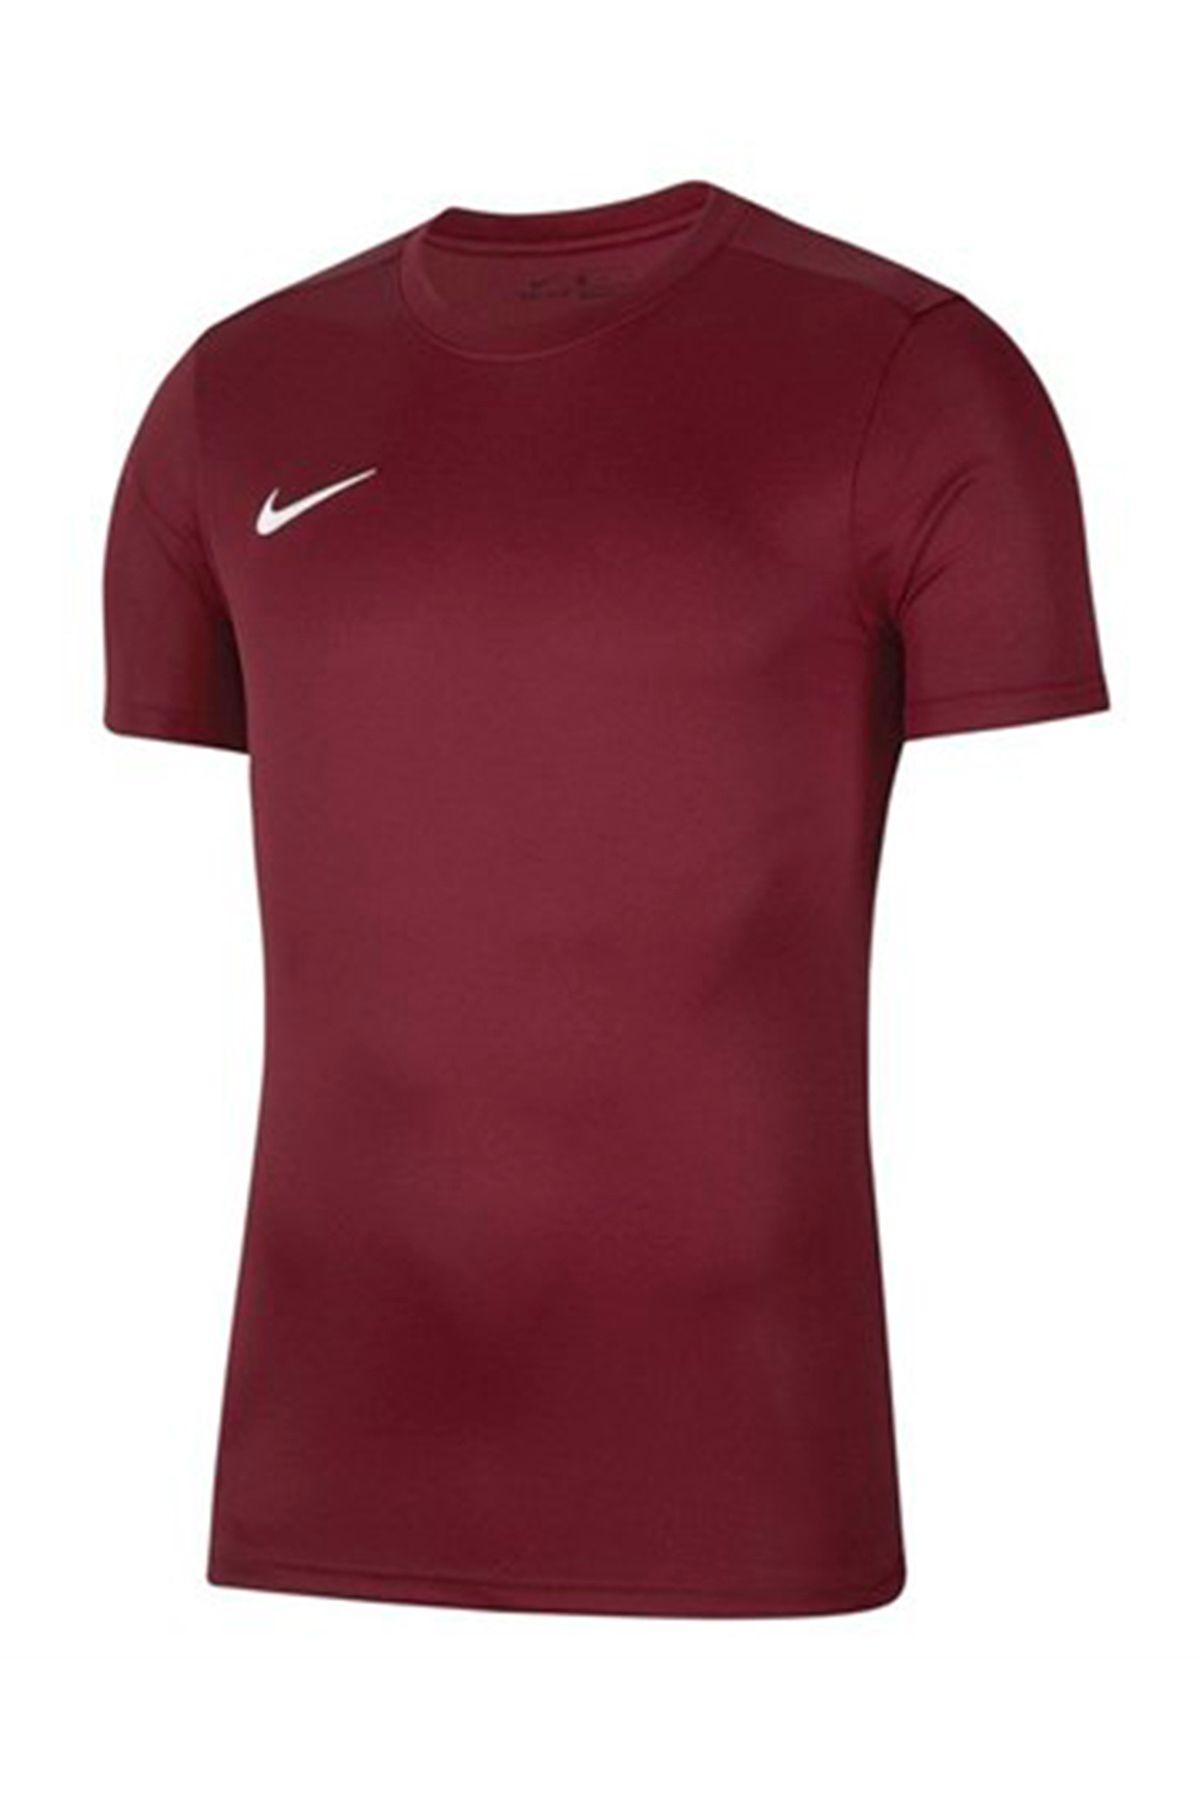 Nike Dry Park Vıı Erkek Tişört Bv6708-677